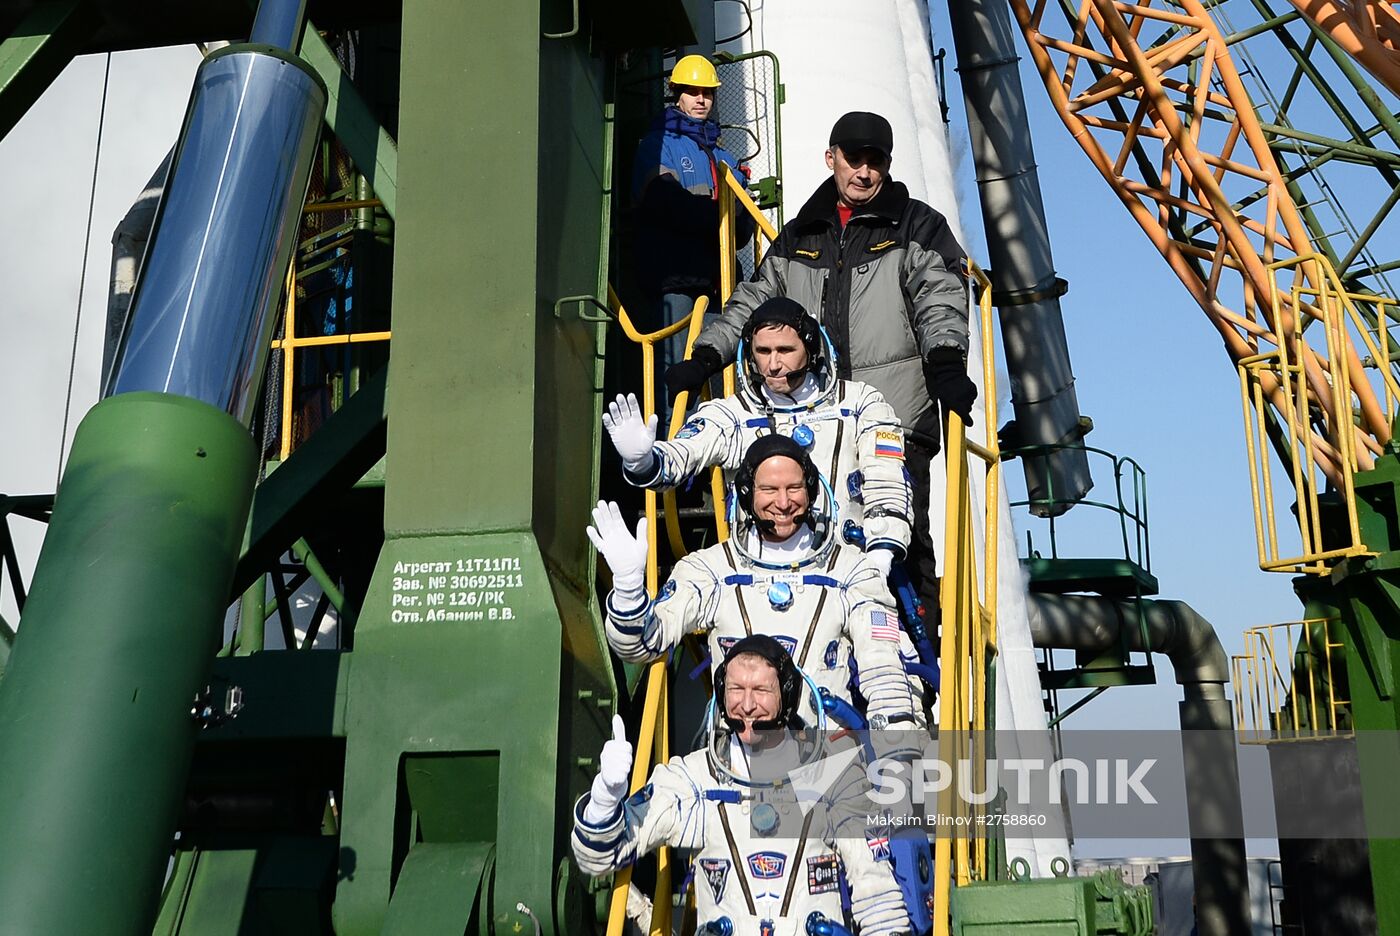 Soyuz TMA-19M spacecraft lifts off from Baikonur Space Center